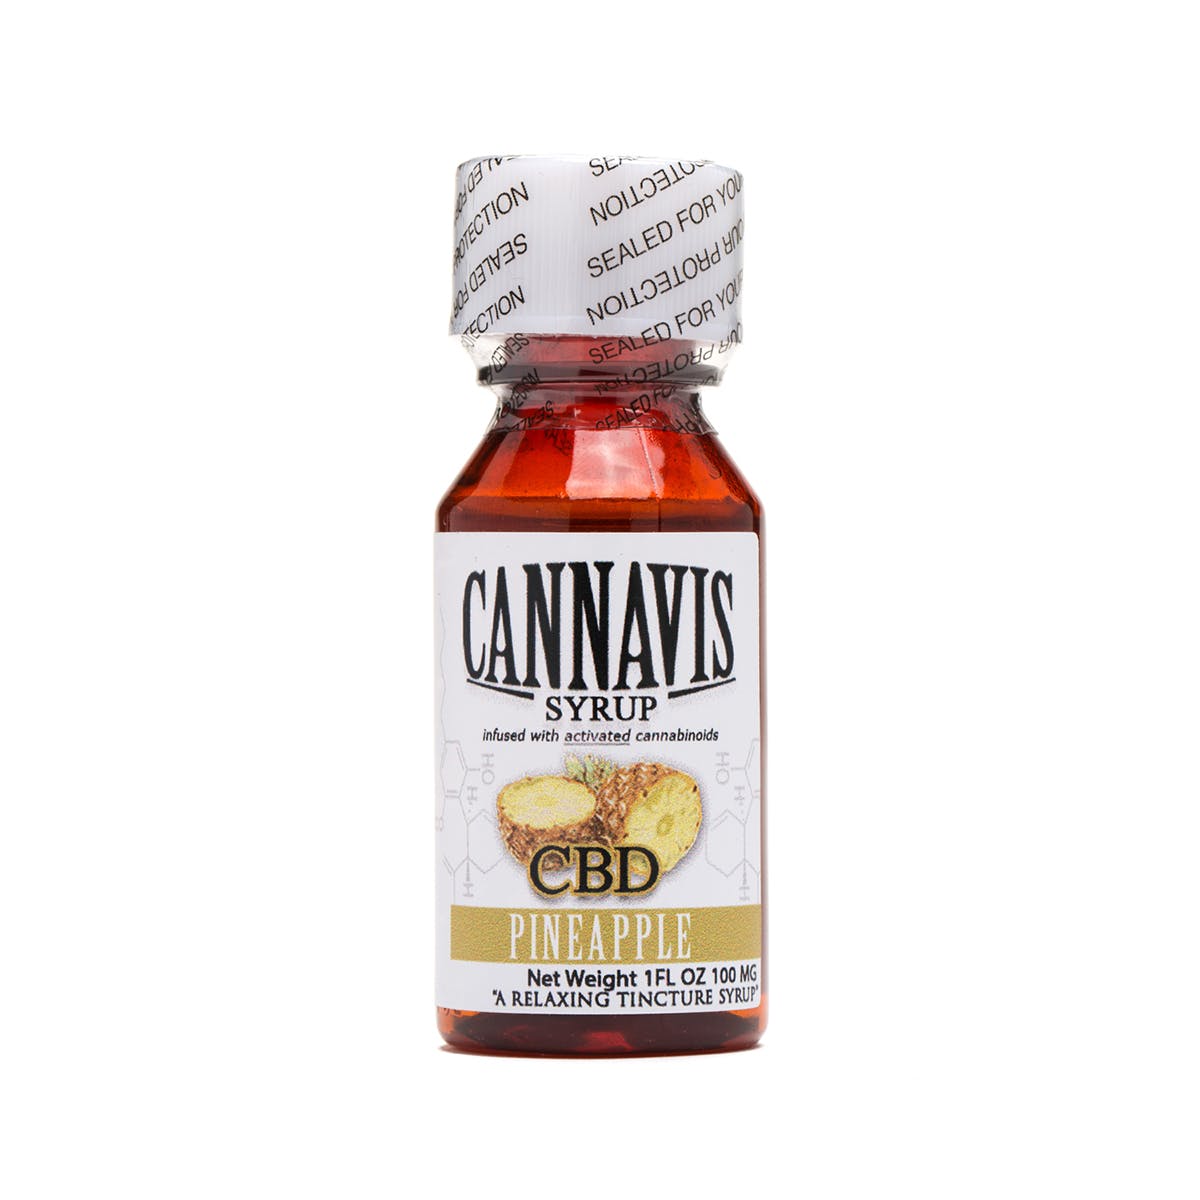 marijuana-dispensaries-treetop-la-in-los-angeles-cannavis-syrup-2c-cbd-pineapple-100mg